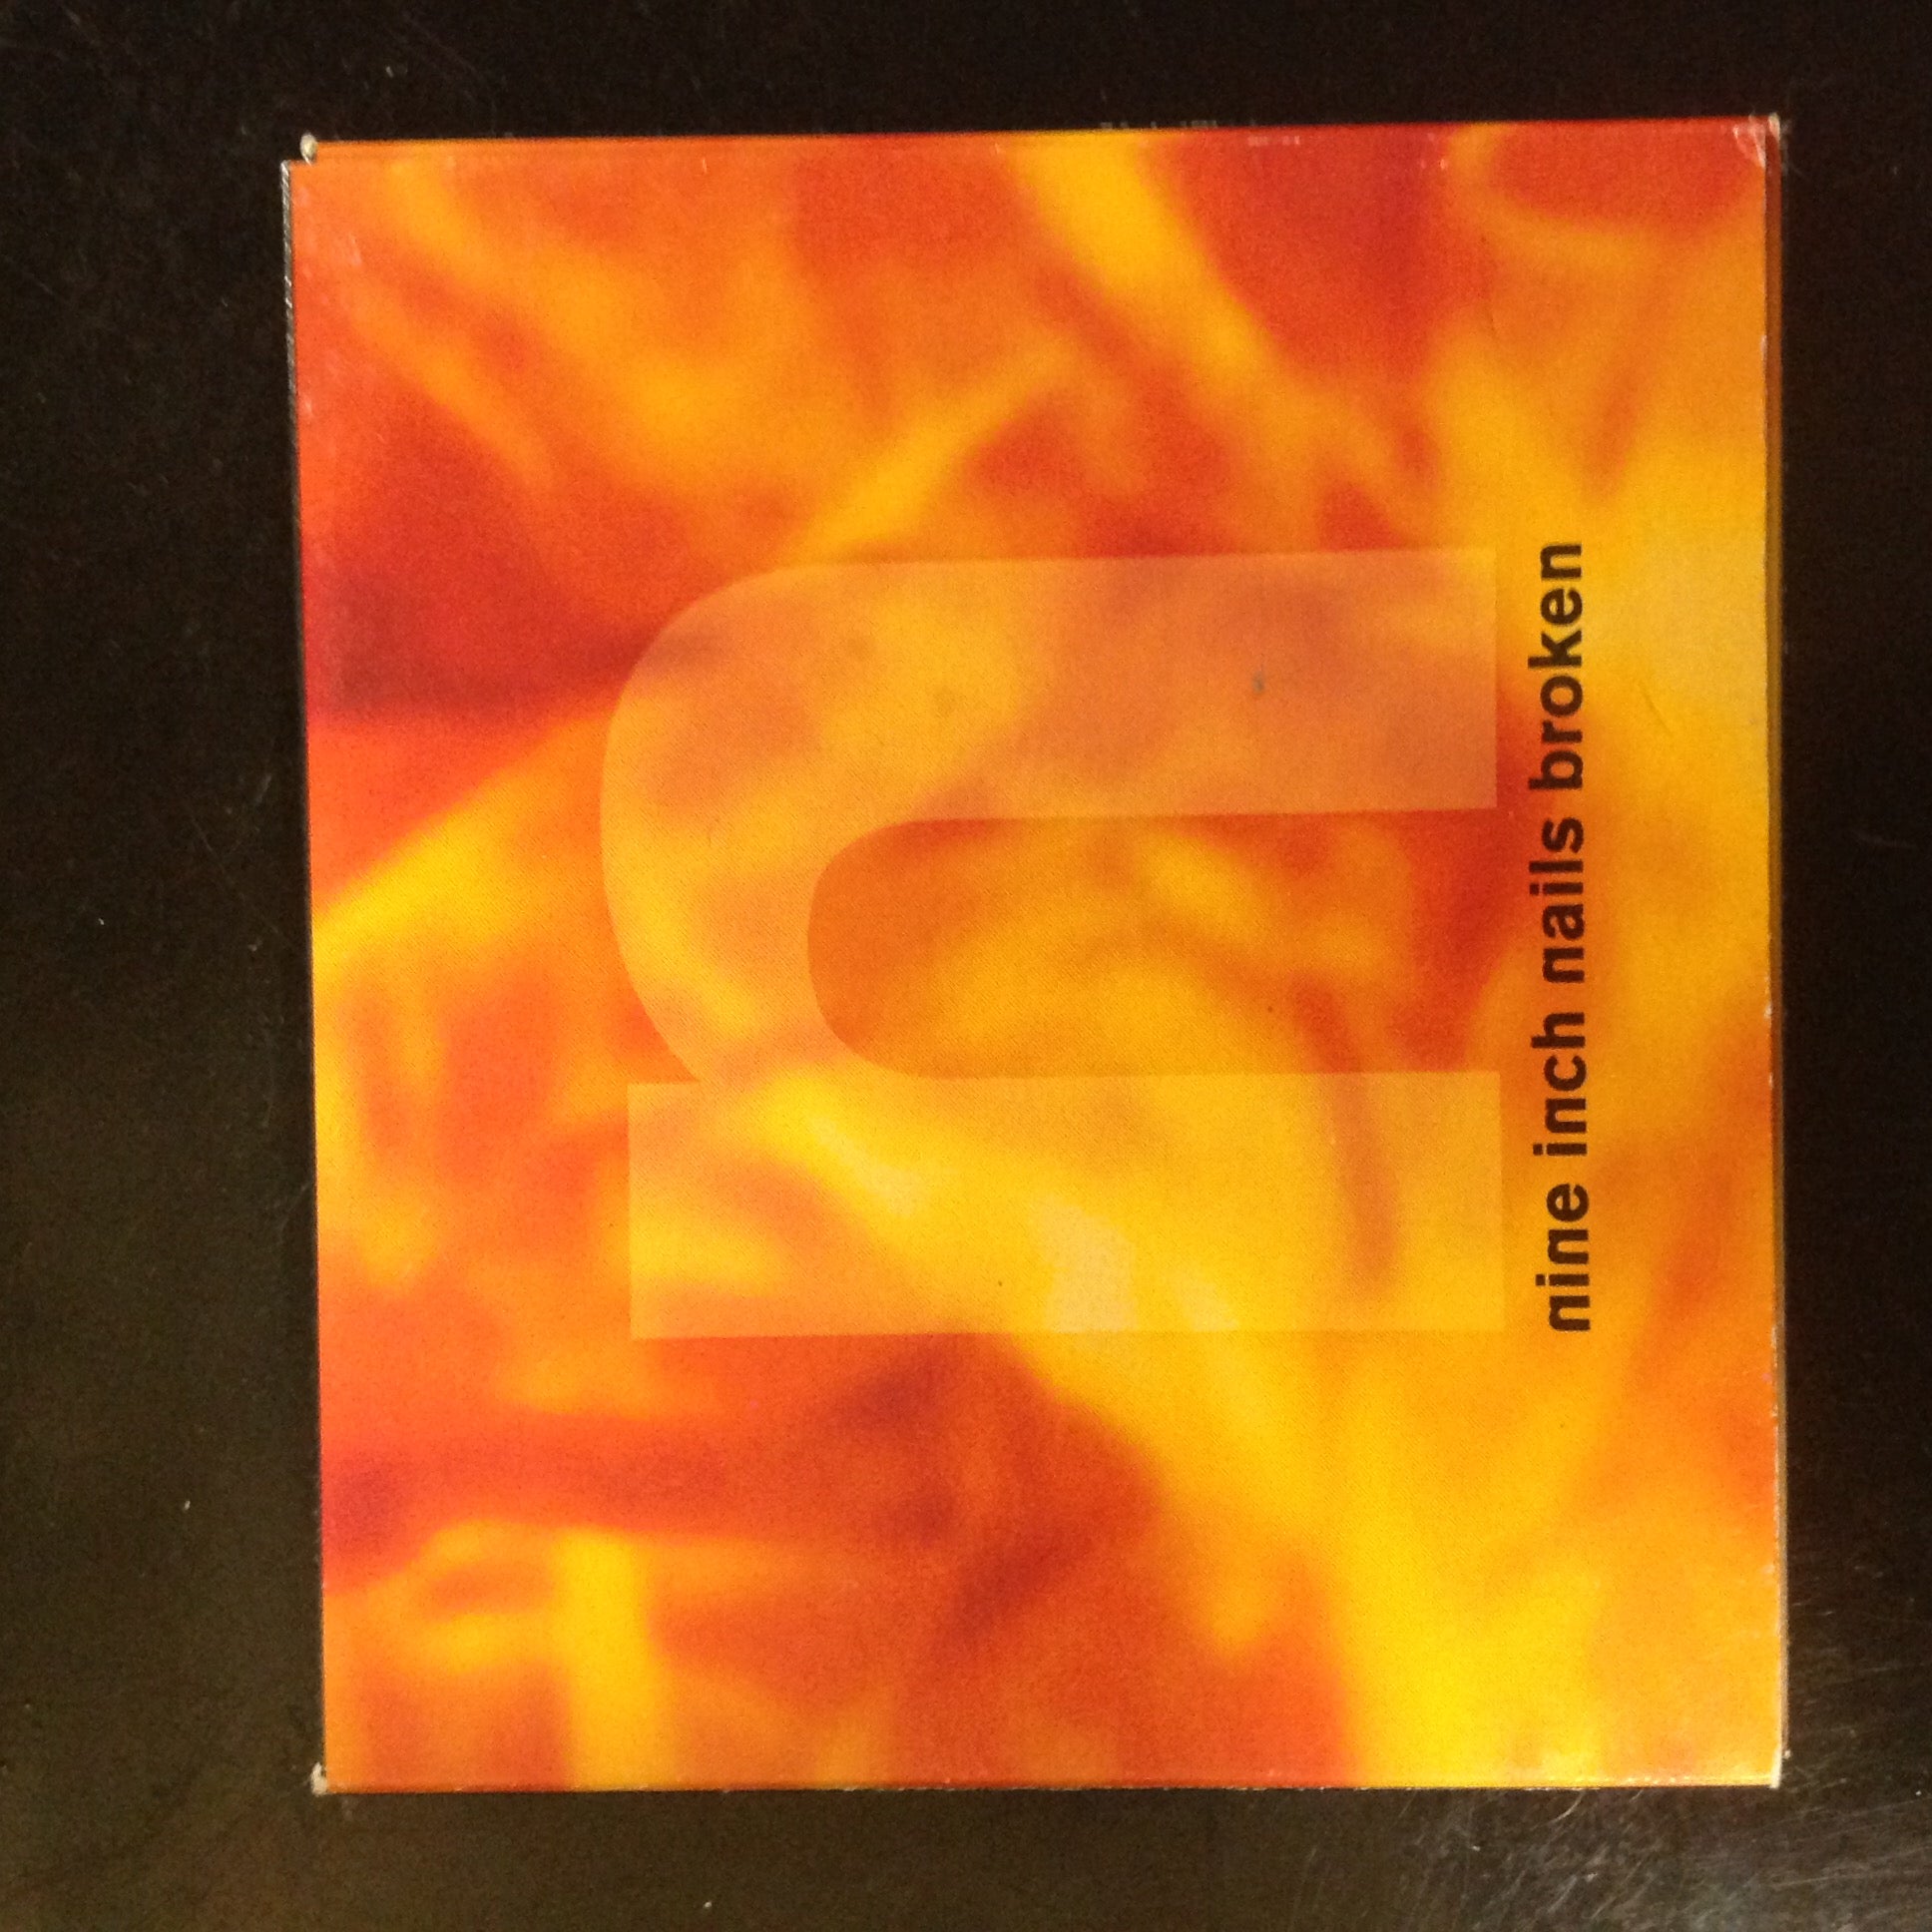 Nine Inch Nails - Broken (Cassette, 1992) TVT Records 75679221346 | eBay